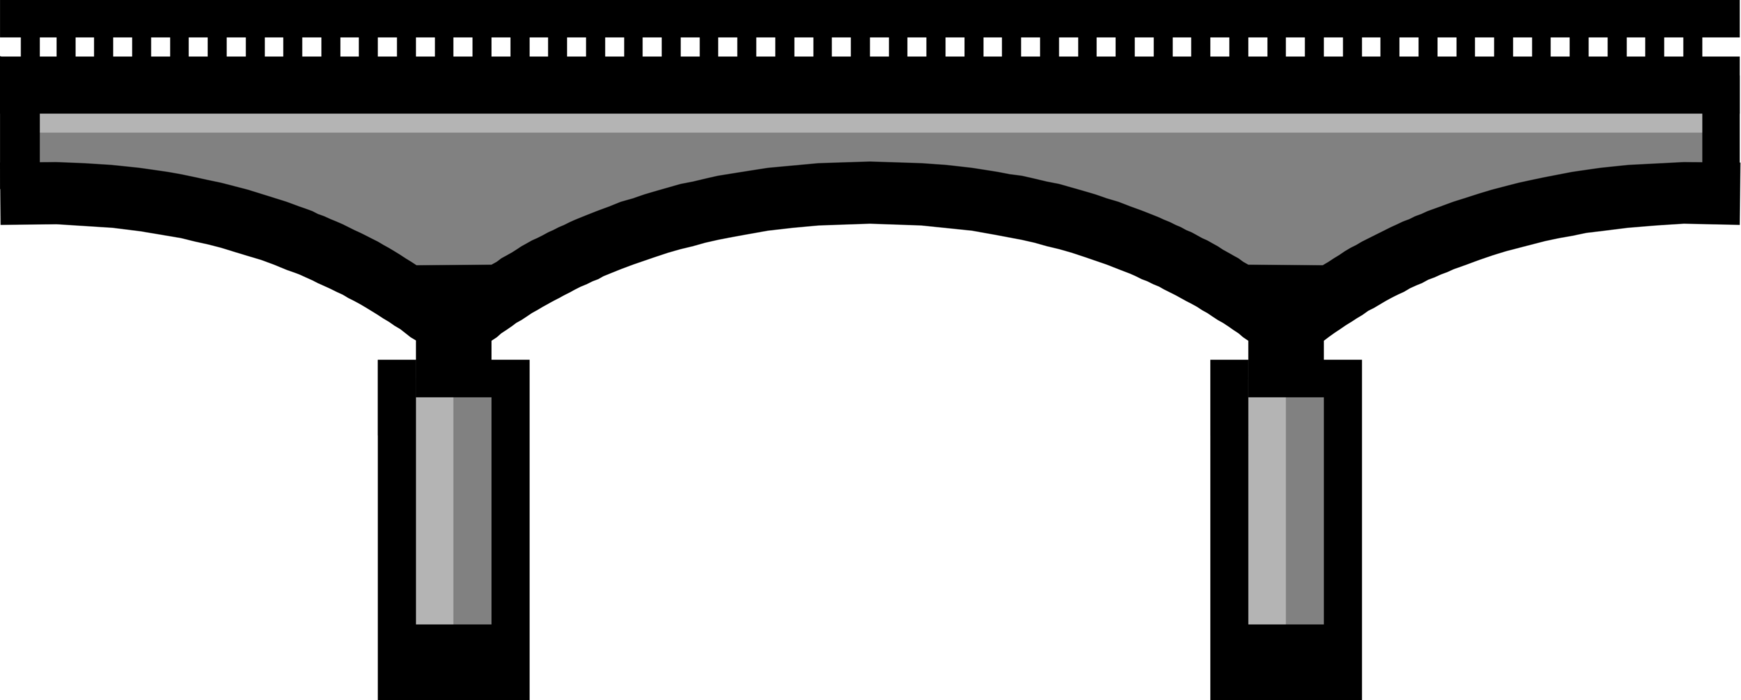 Vector Illustration of Bridge Architecture Symbol